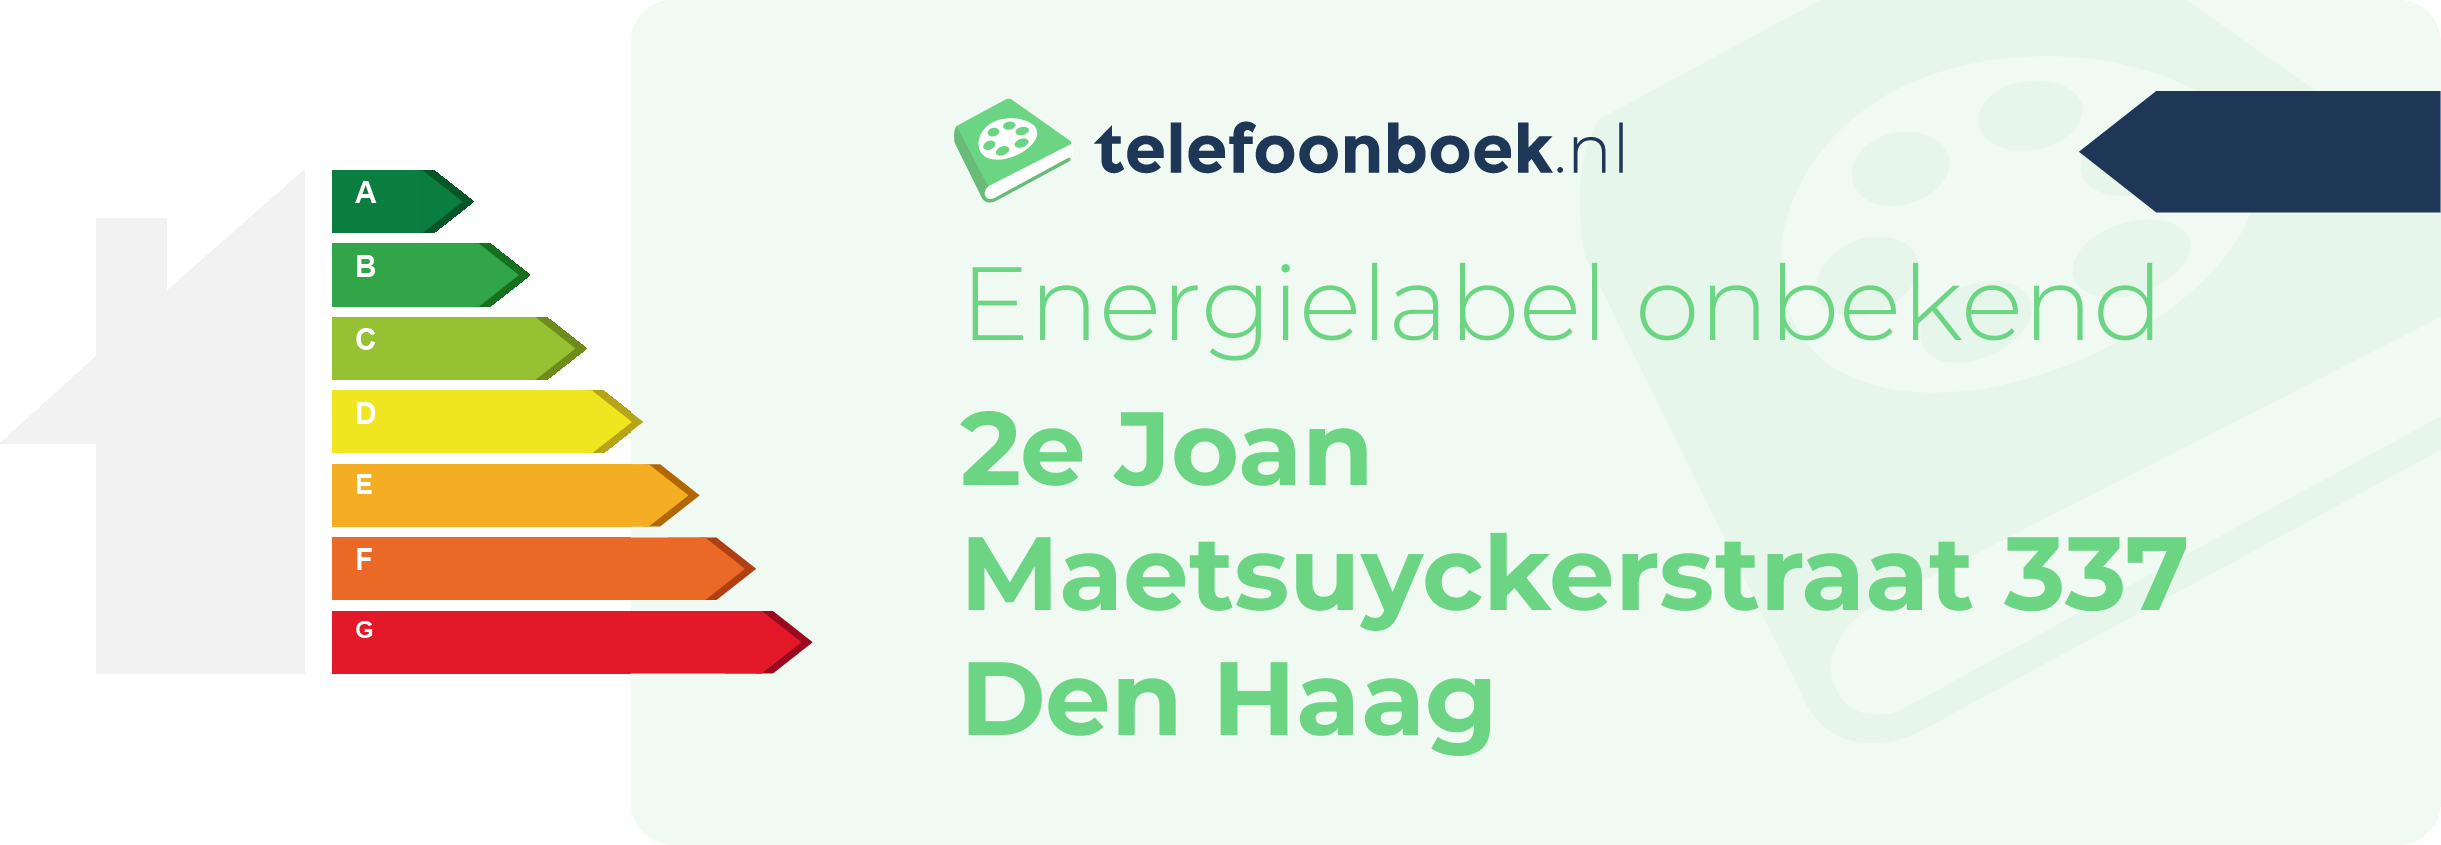 Energielabel 2e Joan Maetsuyckerstraat 337 Den Haag